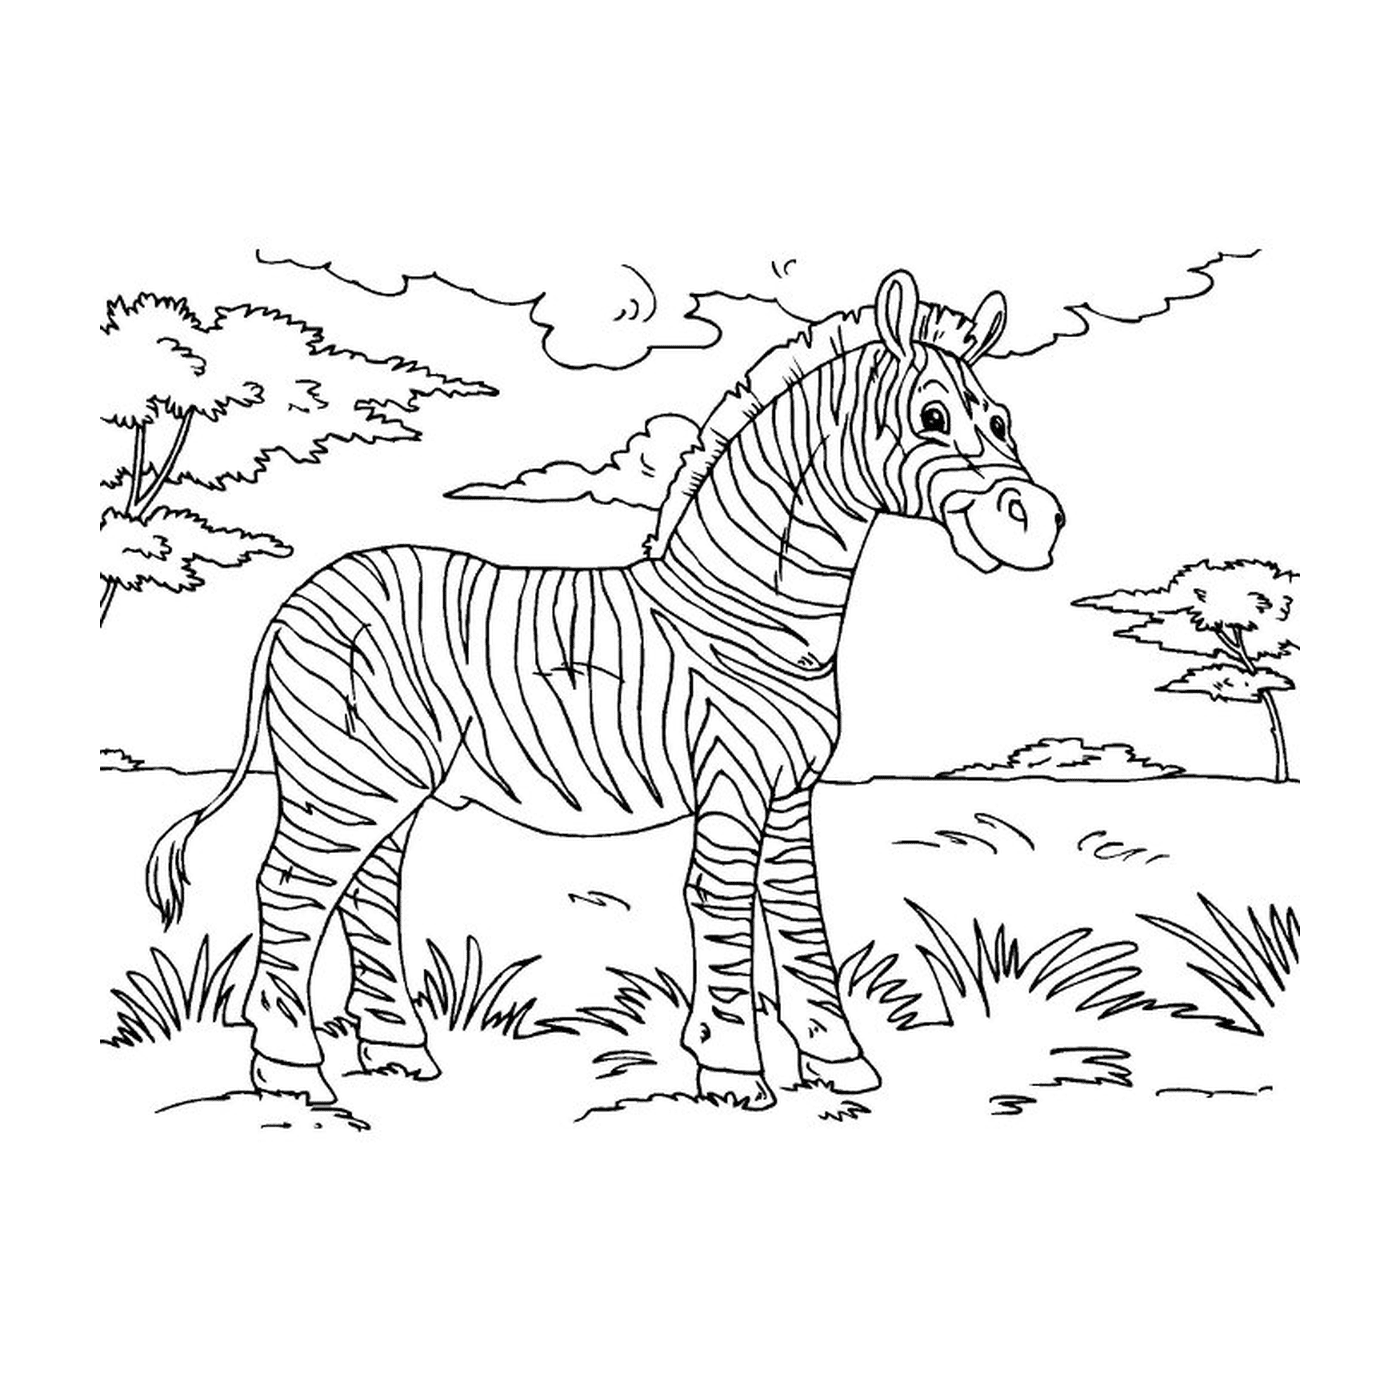  Zebra pacífica na natureza 